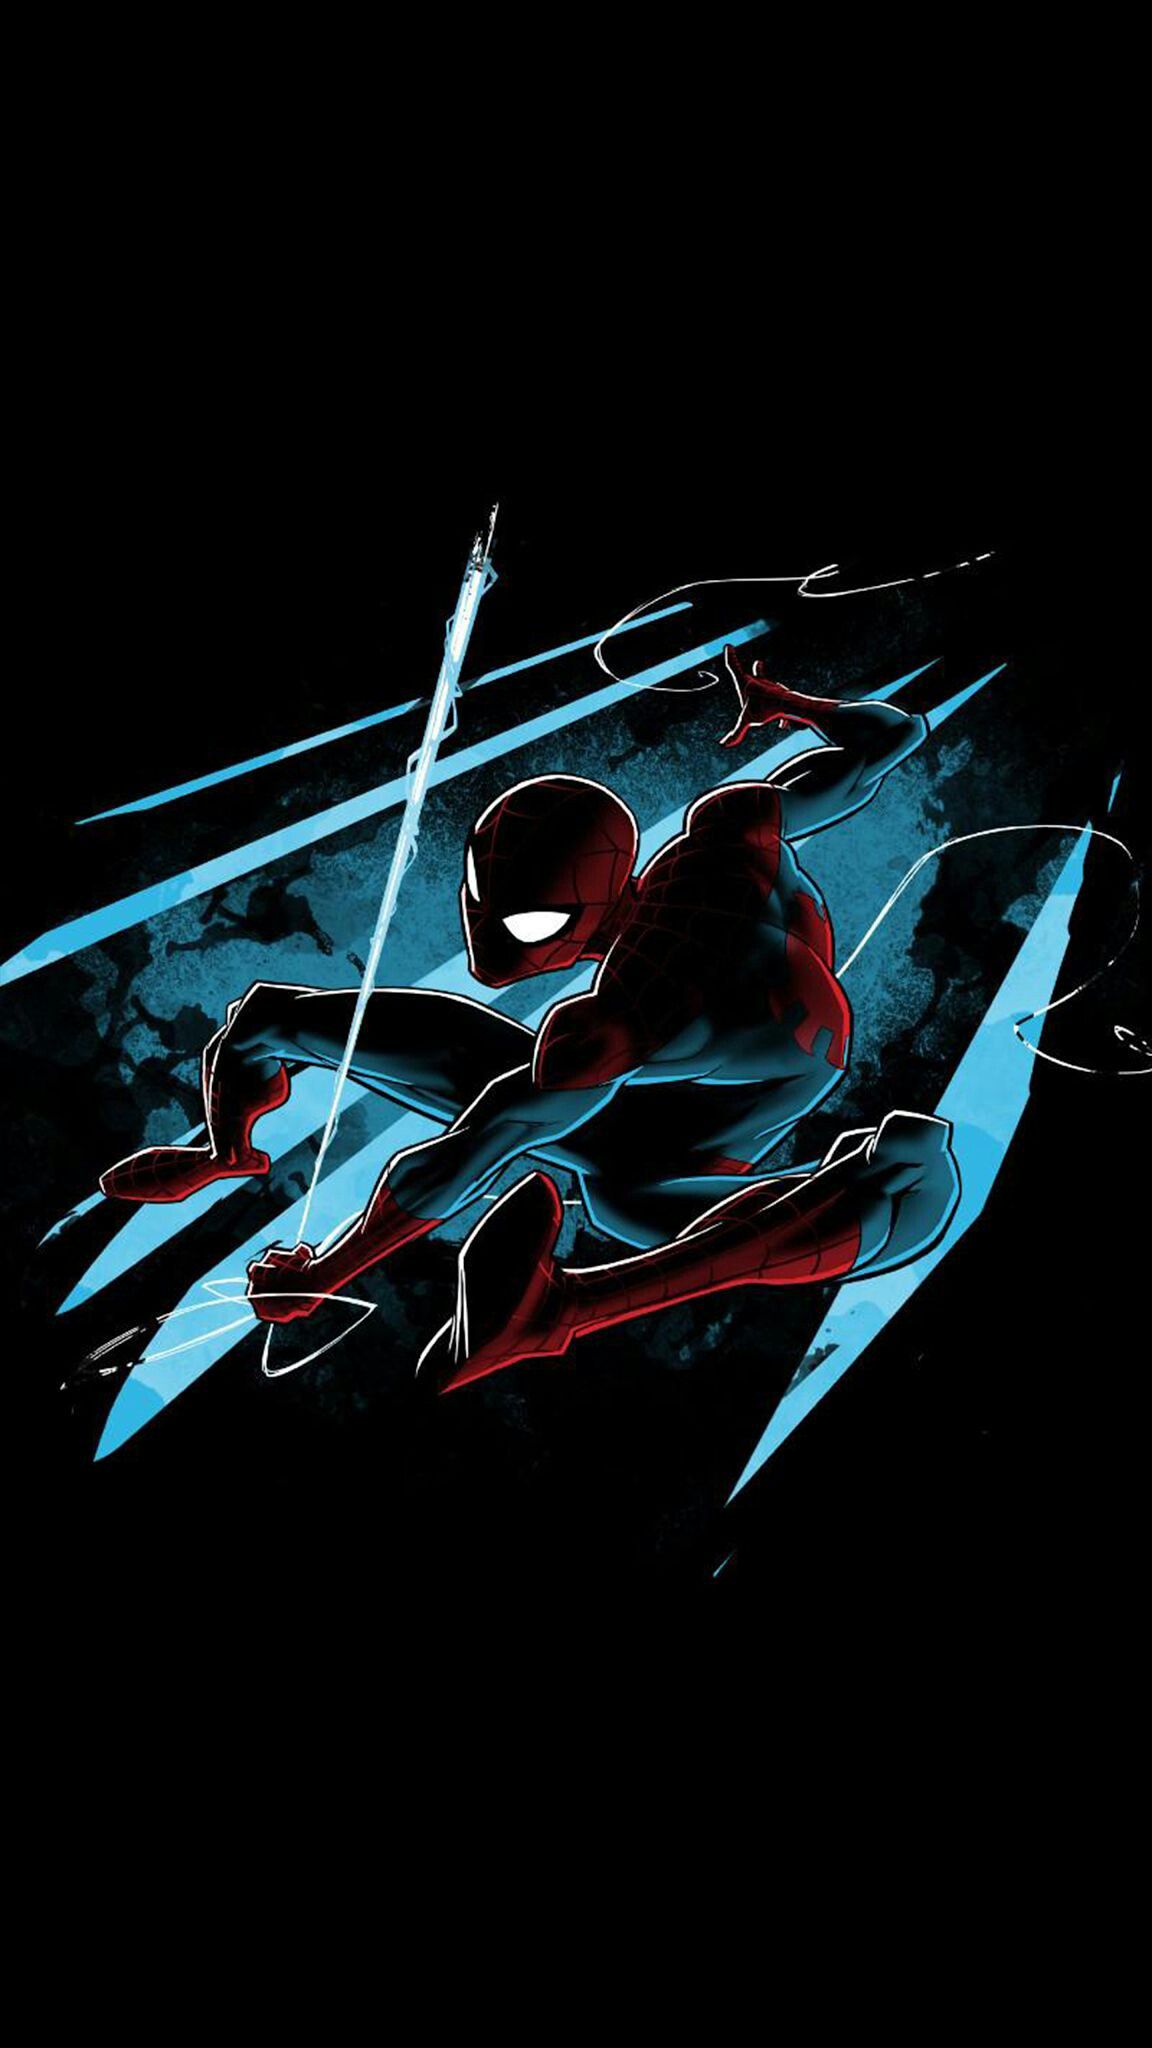 Spiderman Wallpaper Android Spiderman comic Superhero wallpaper